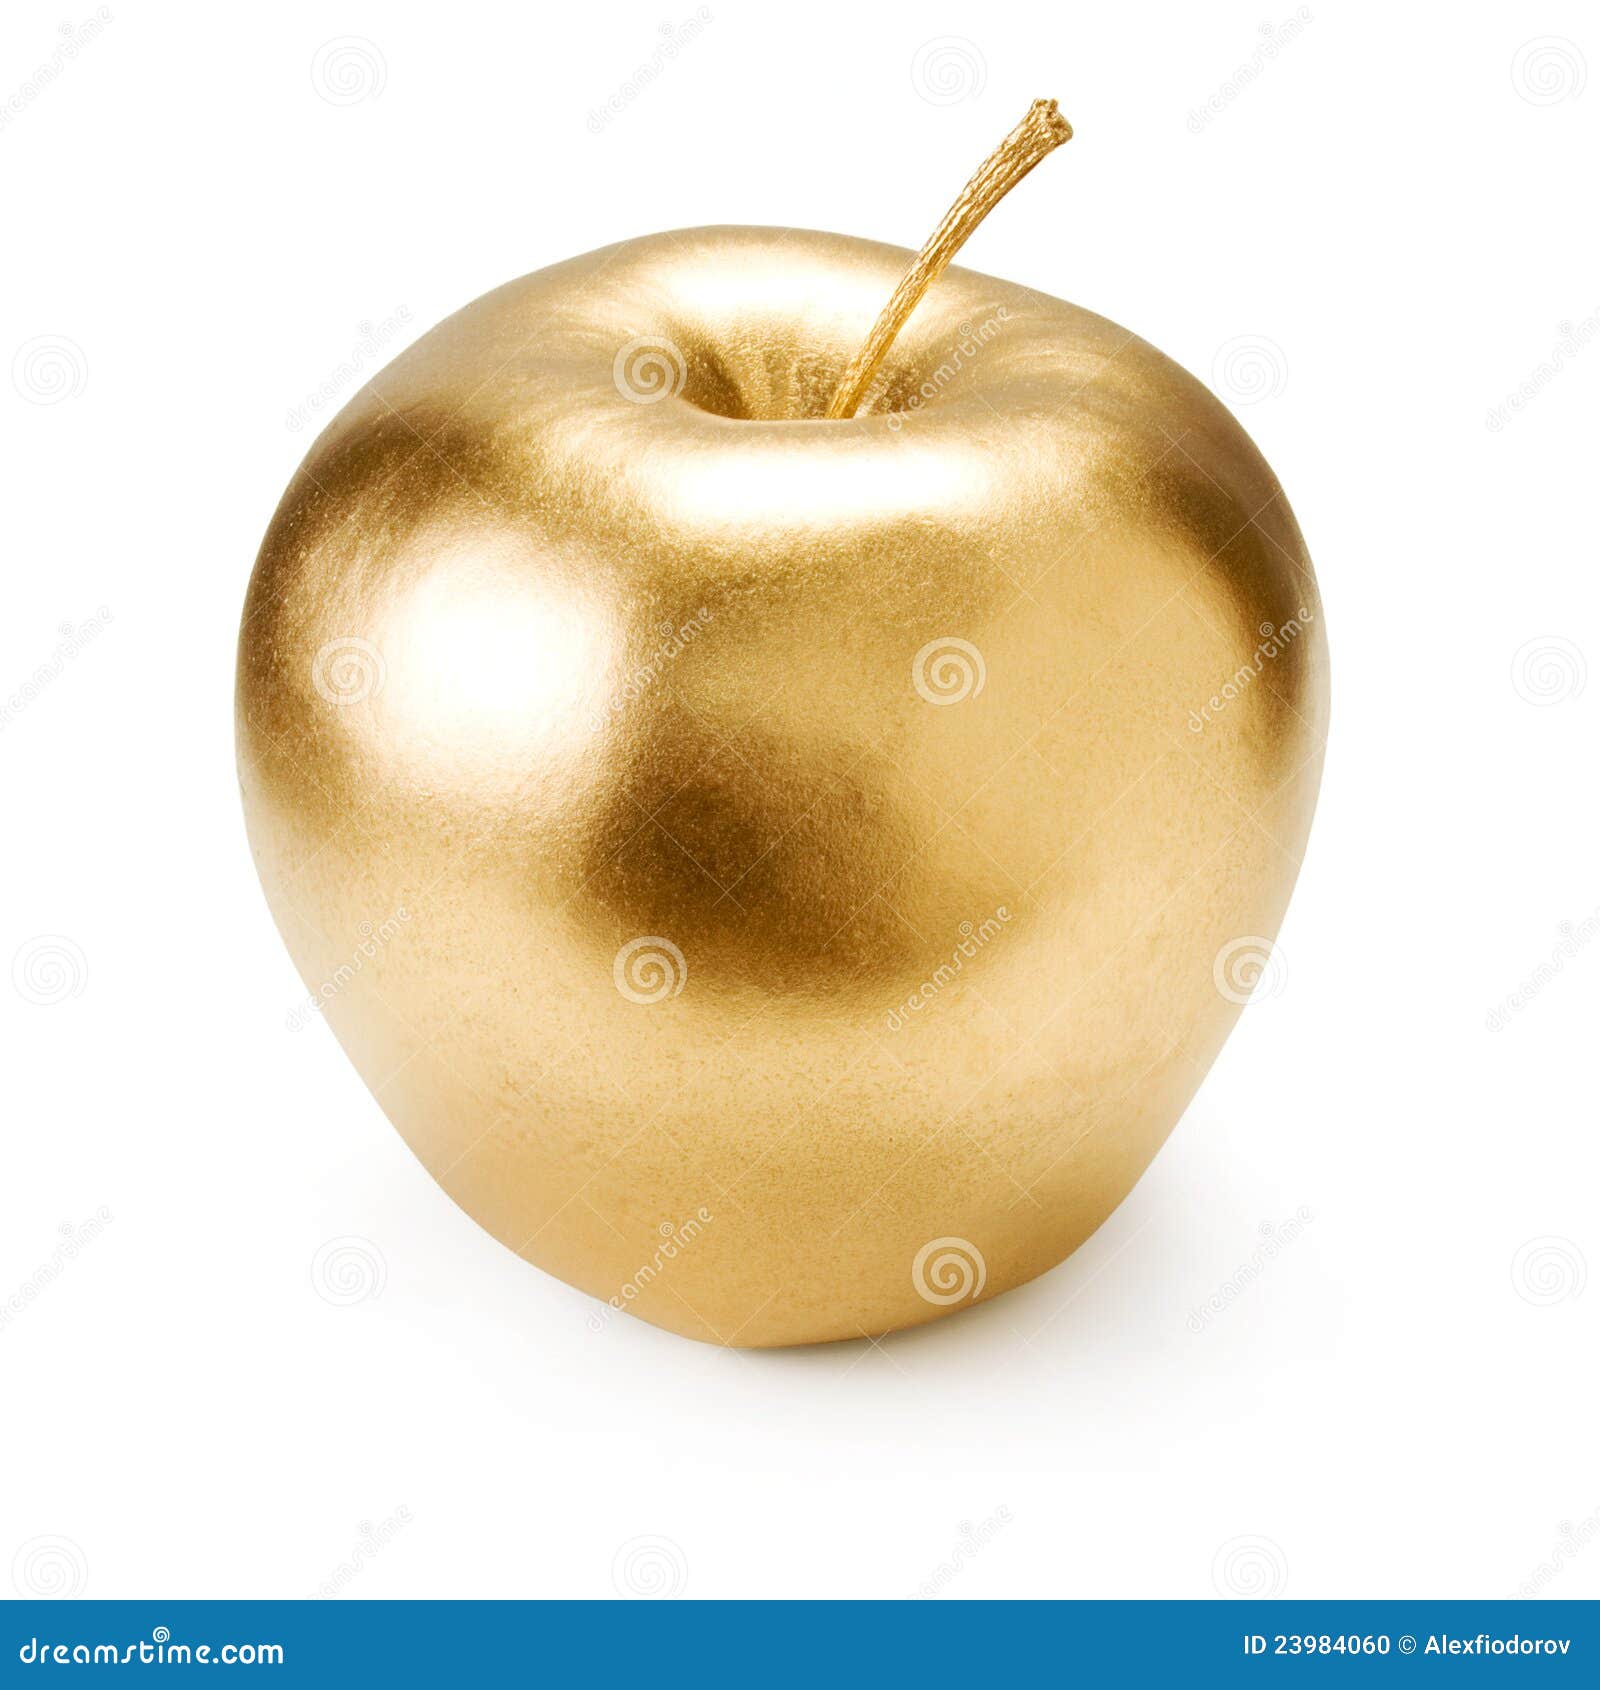 gold apple.